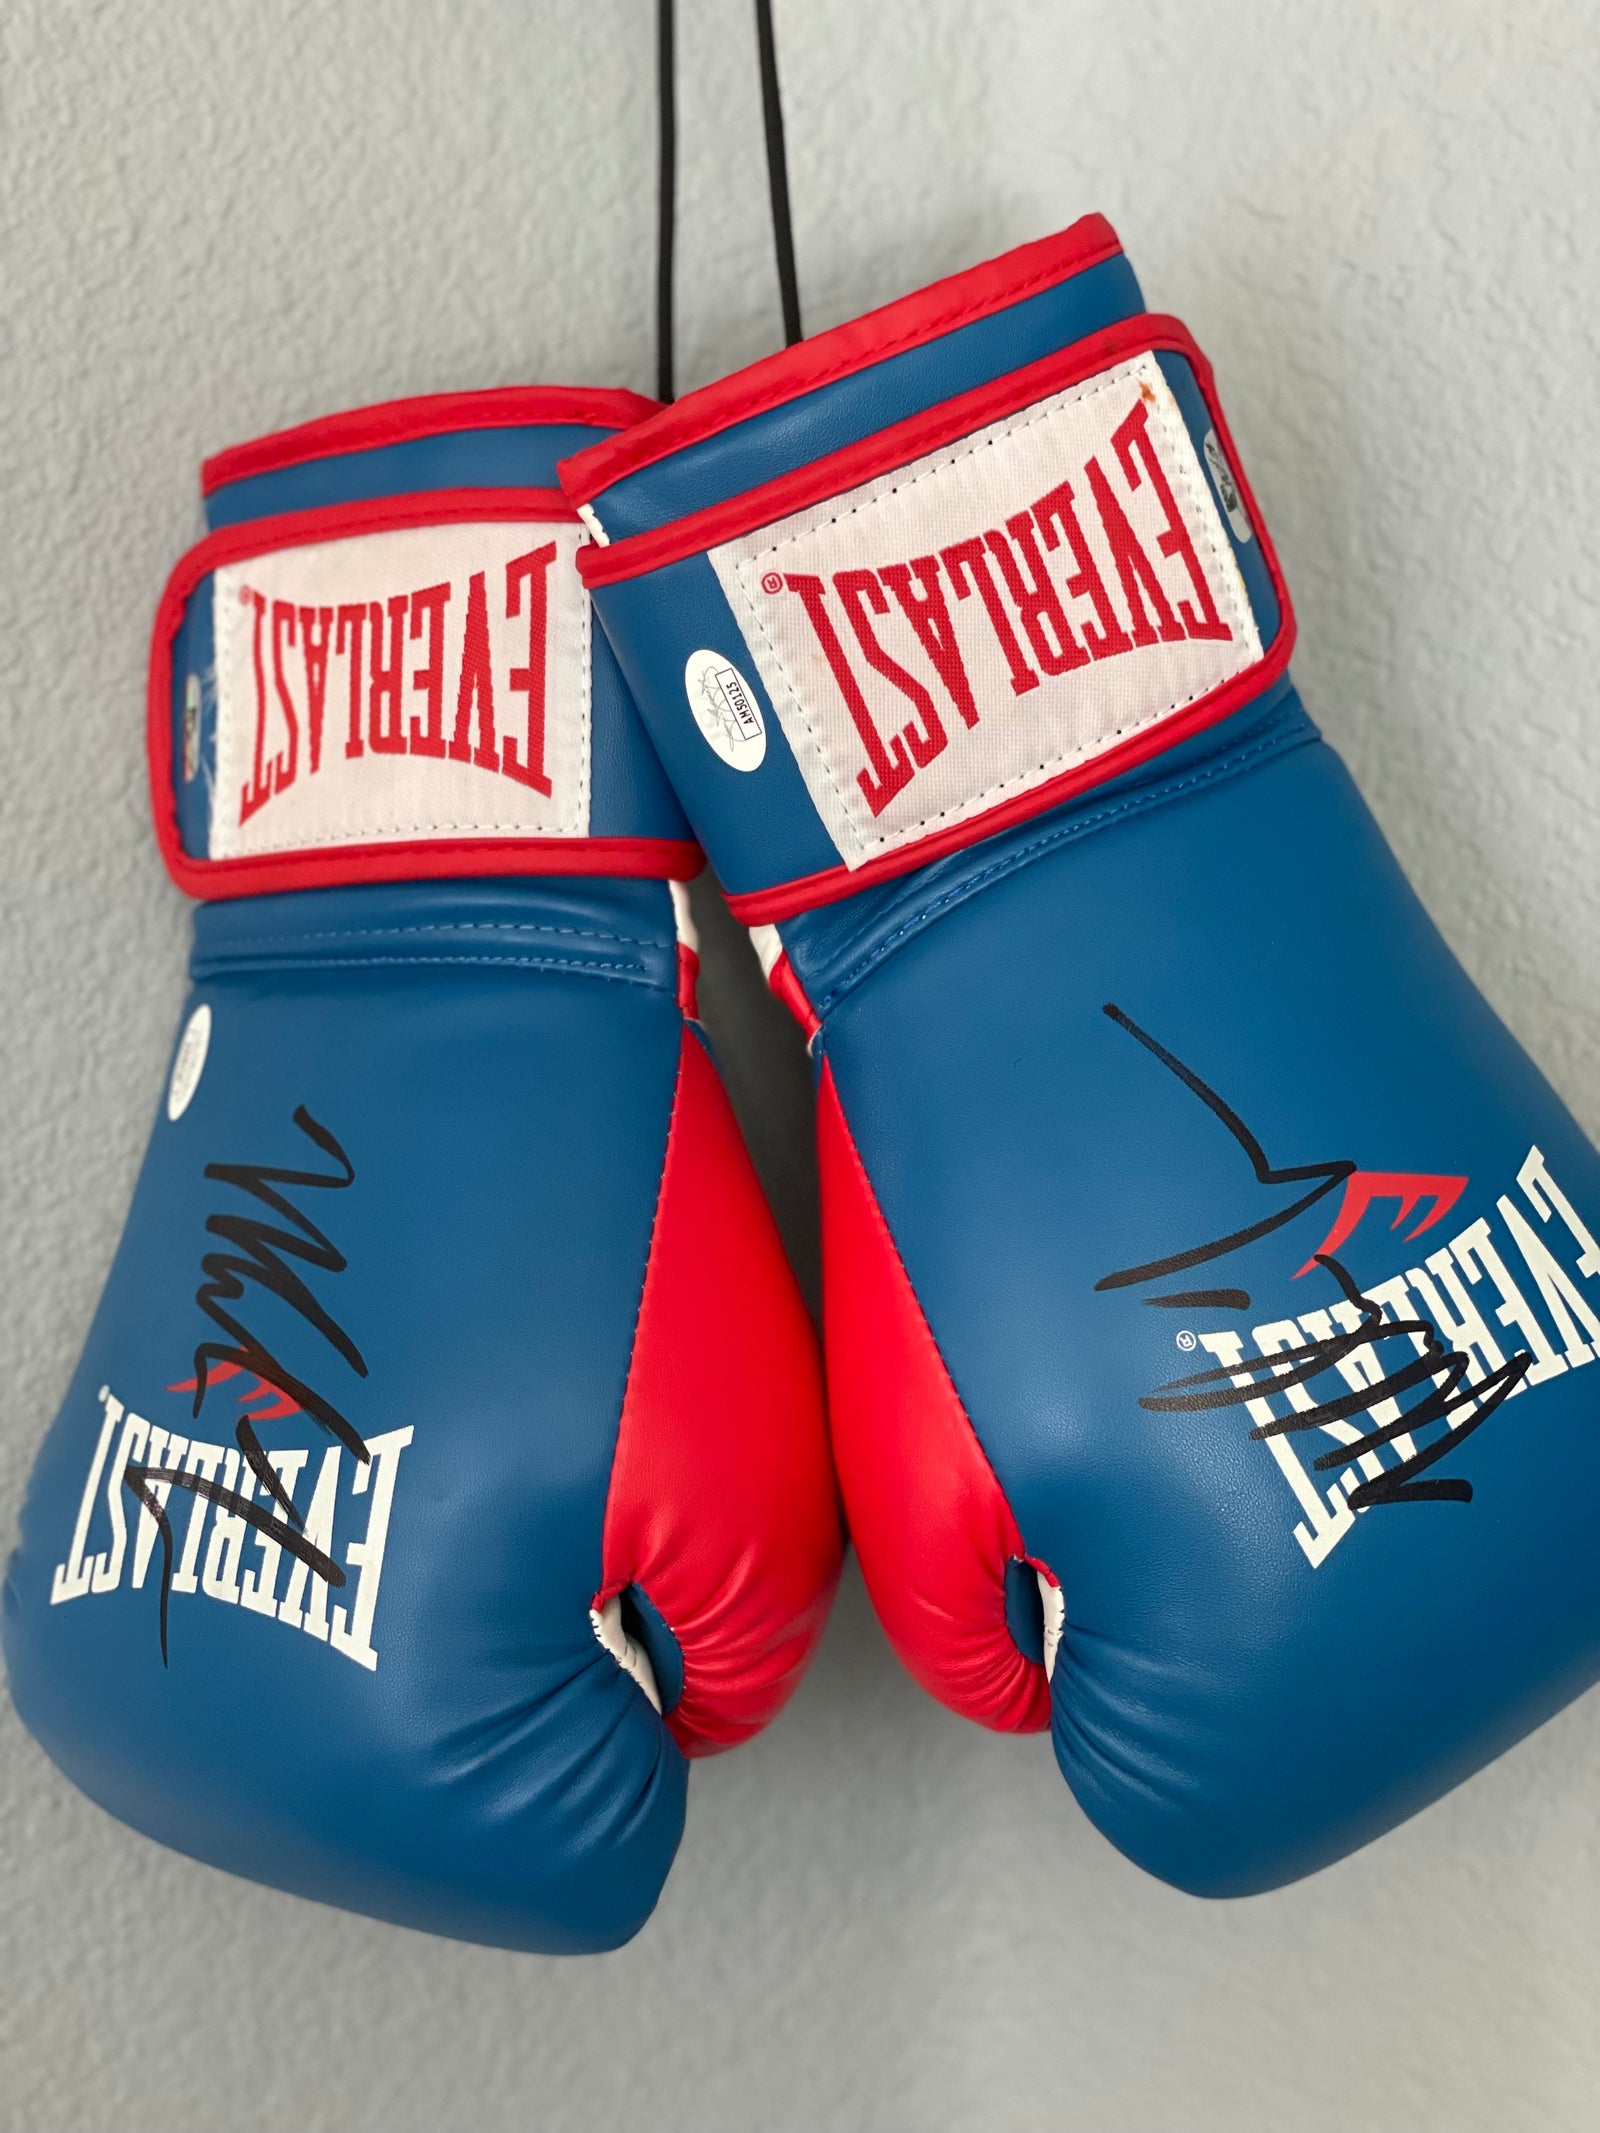 James 'Bonecrusher' Smith Signed Everlast Boxing Glove Inscribed Champion  86-87 (Schwartz)